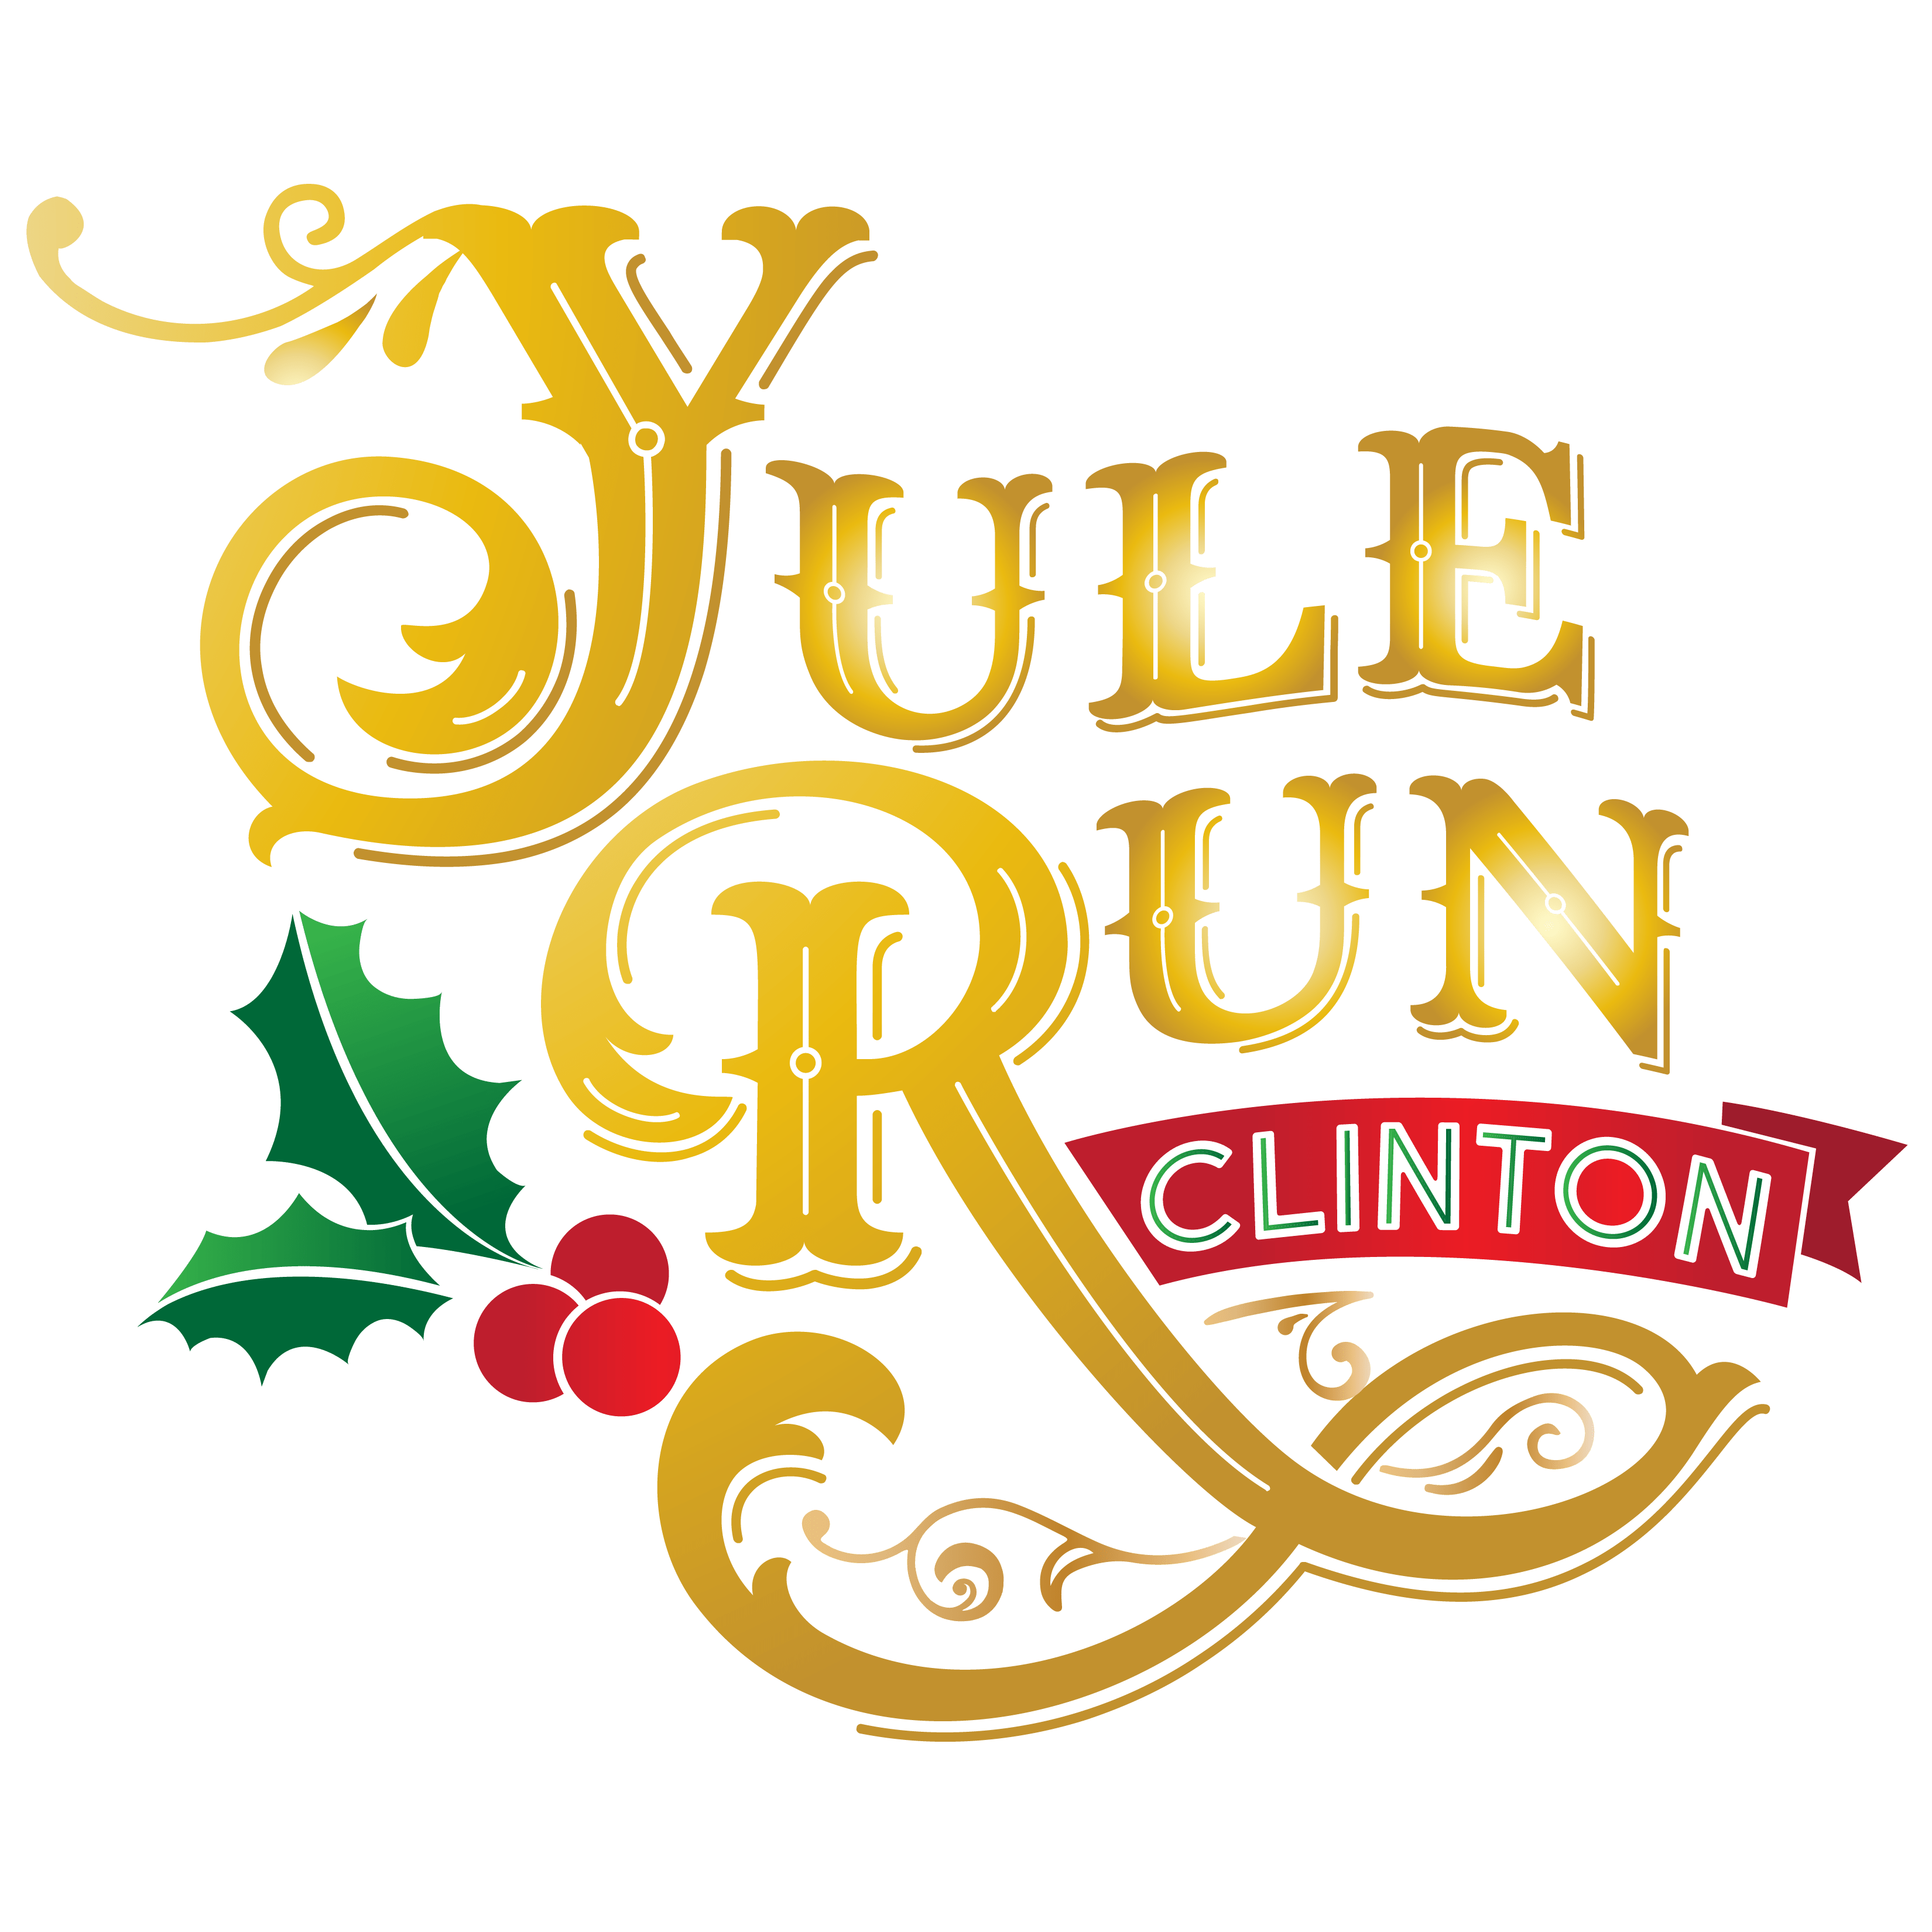 Yule Run Clinton logo